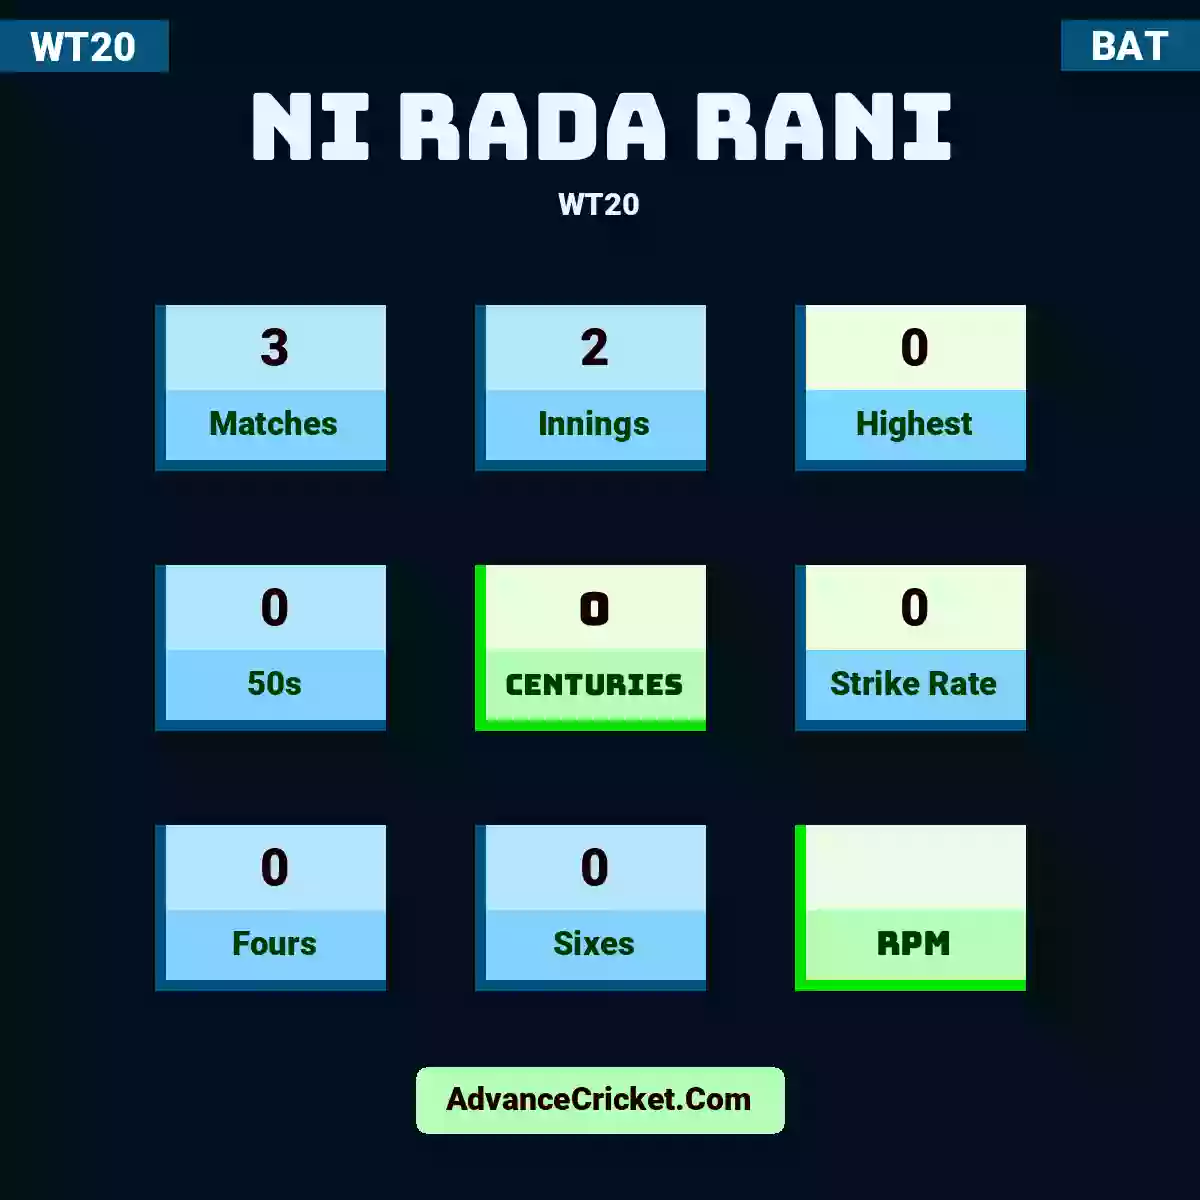 Ni Rada Rani WT20 , Ni Rada Rani played 3 matches, scored 0 runs as highest, 0 half-centuries, and 0 centuries, with a strike rate of 0. N.Rada.Rani hit 0 fours and 0 sixes.